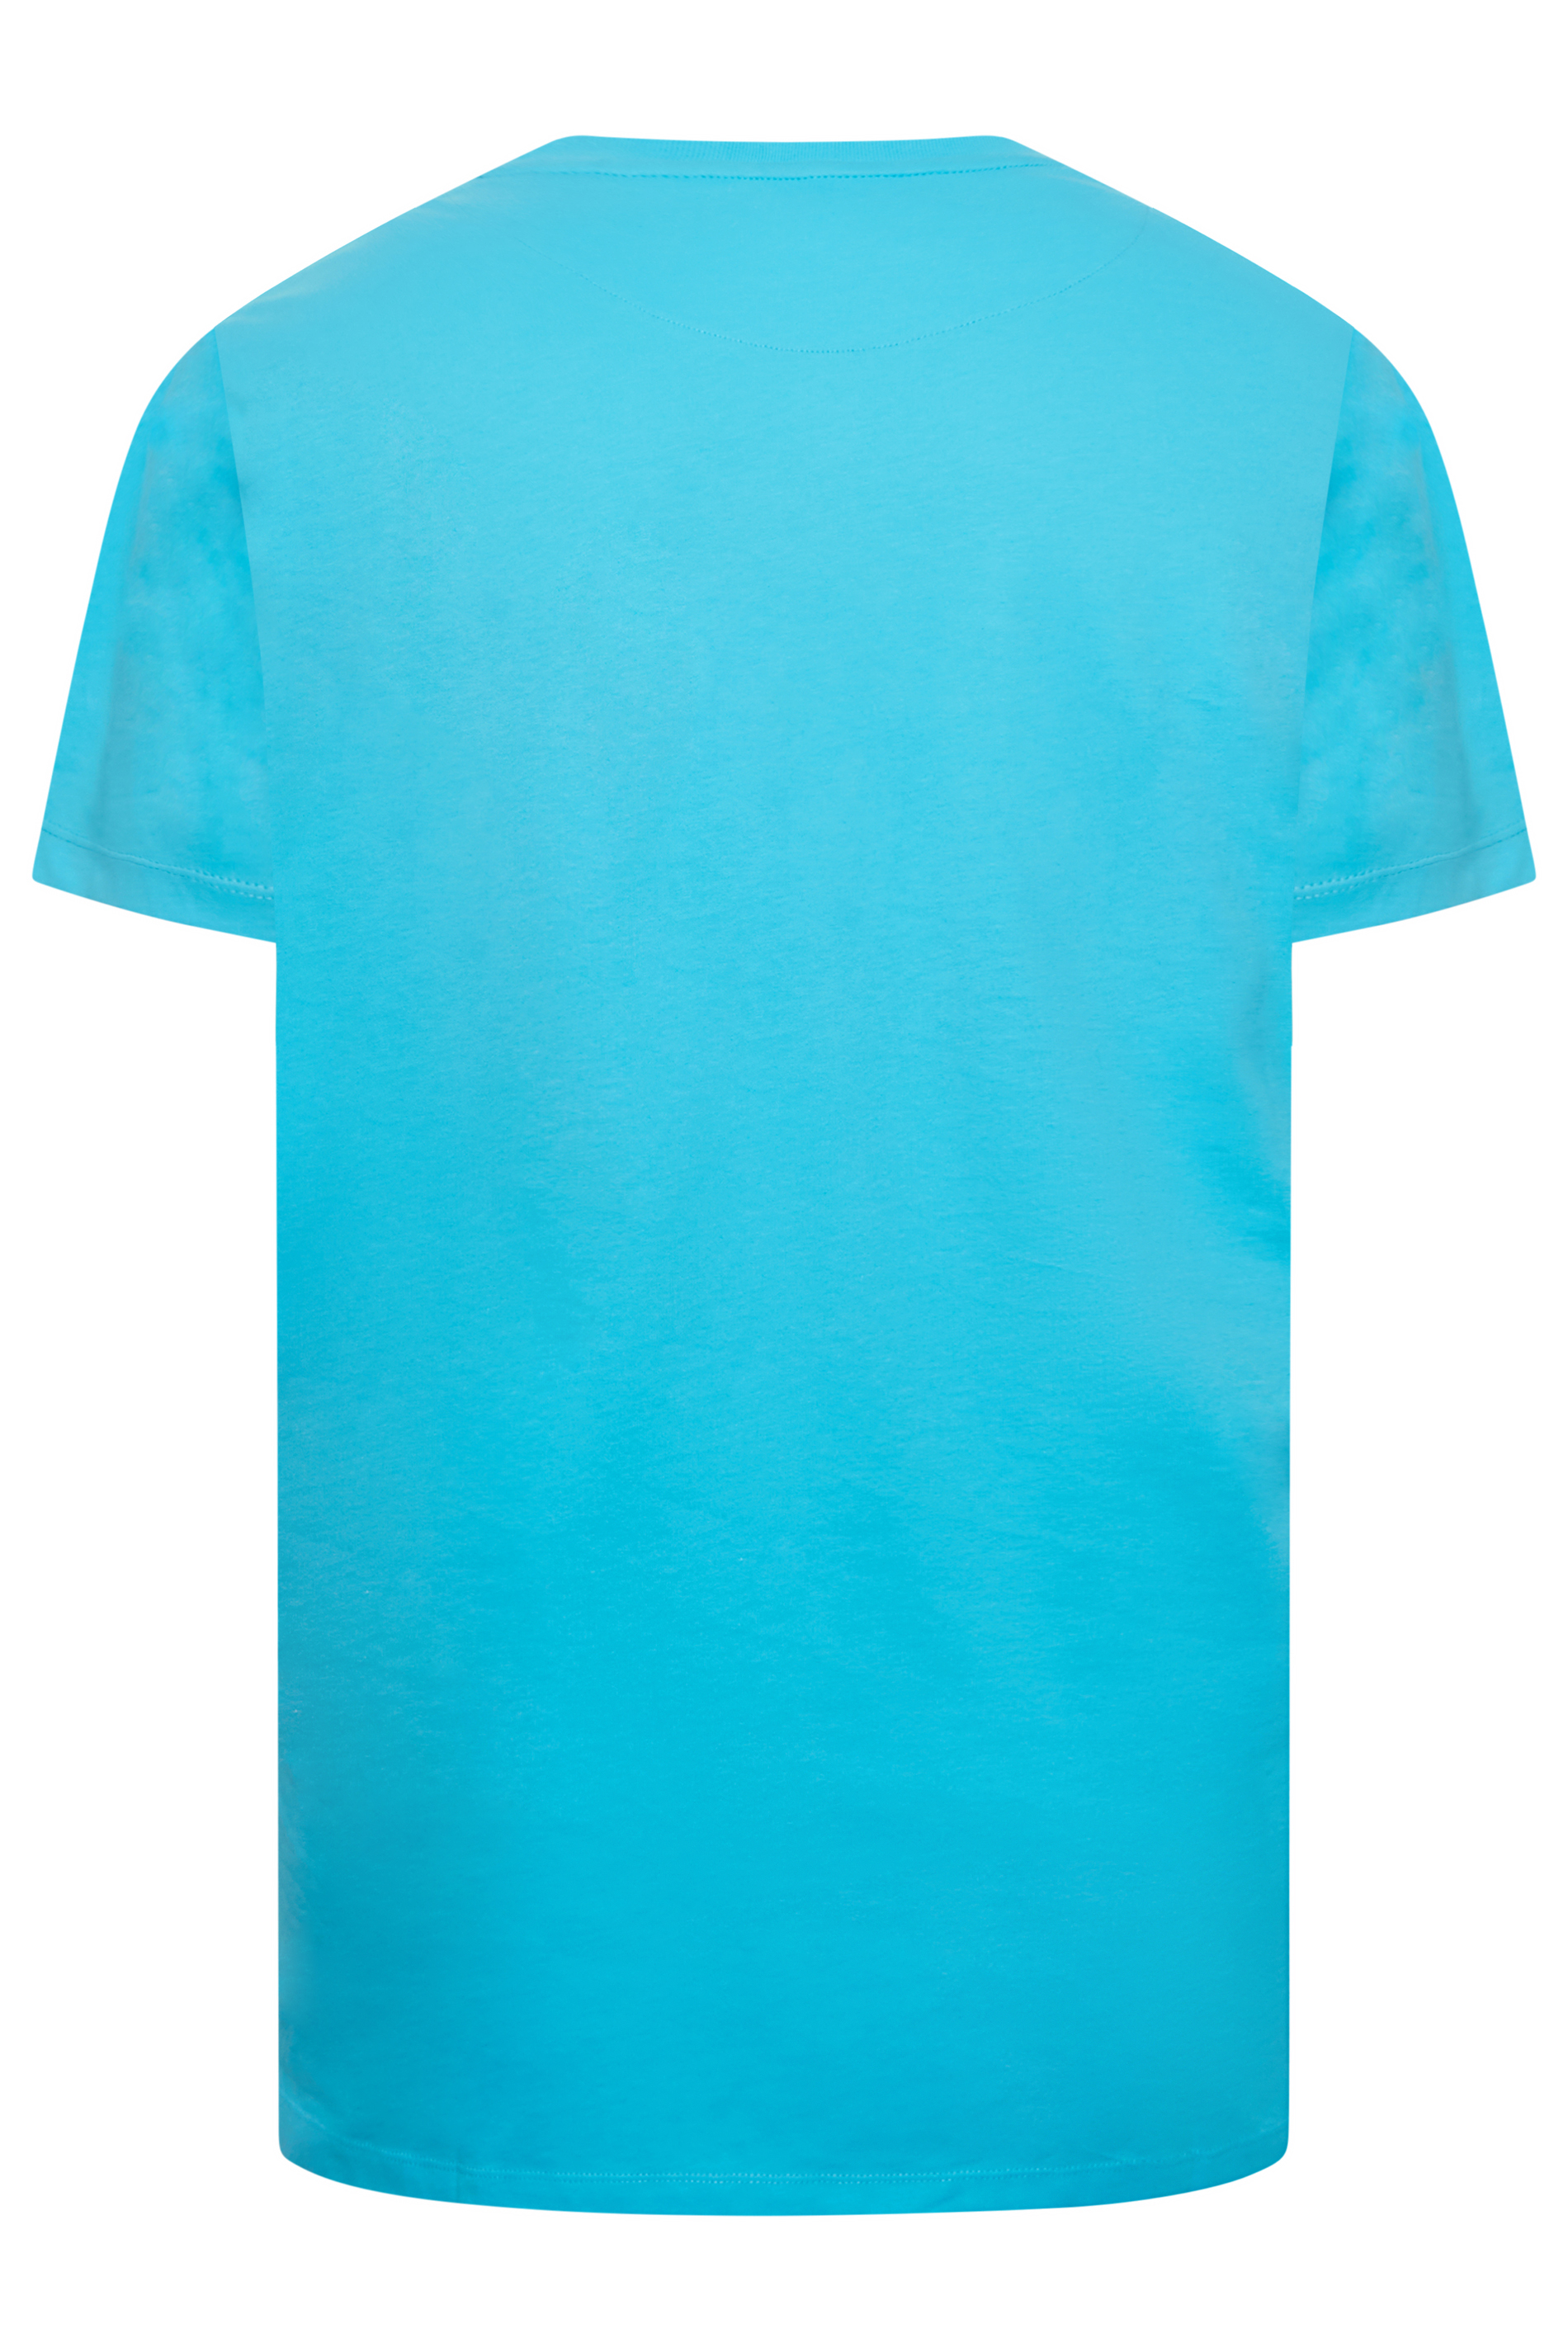 U.S. POLO ASSN. Big & Tall Light Blue Authentic T-Shirt | BadRhino 3